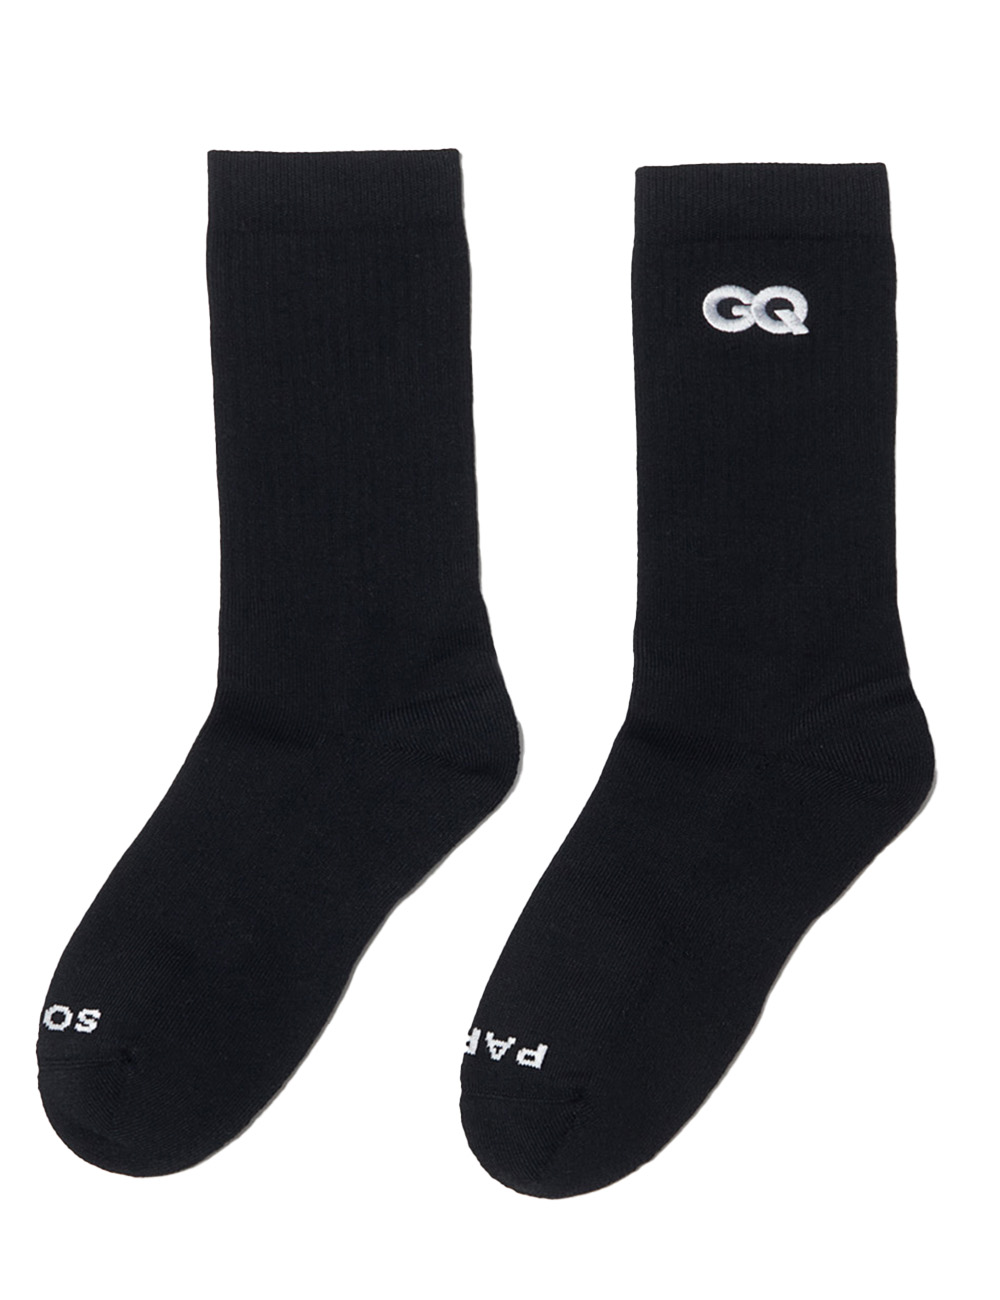 GQ Party-Socken, Schwarz Gr. L